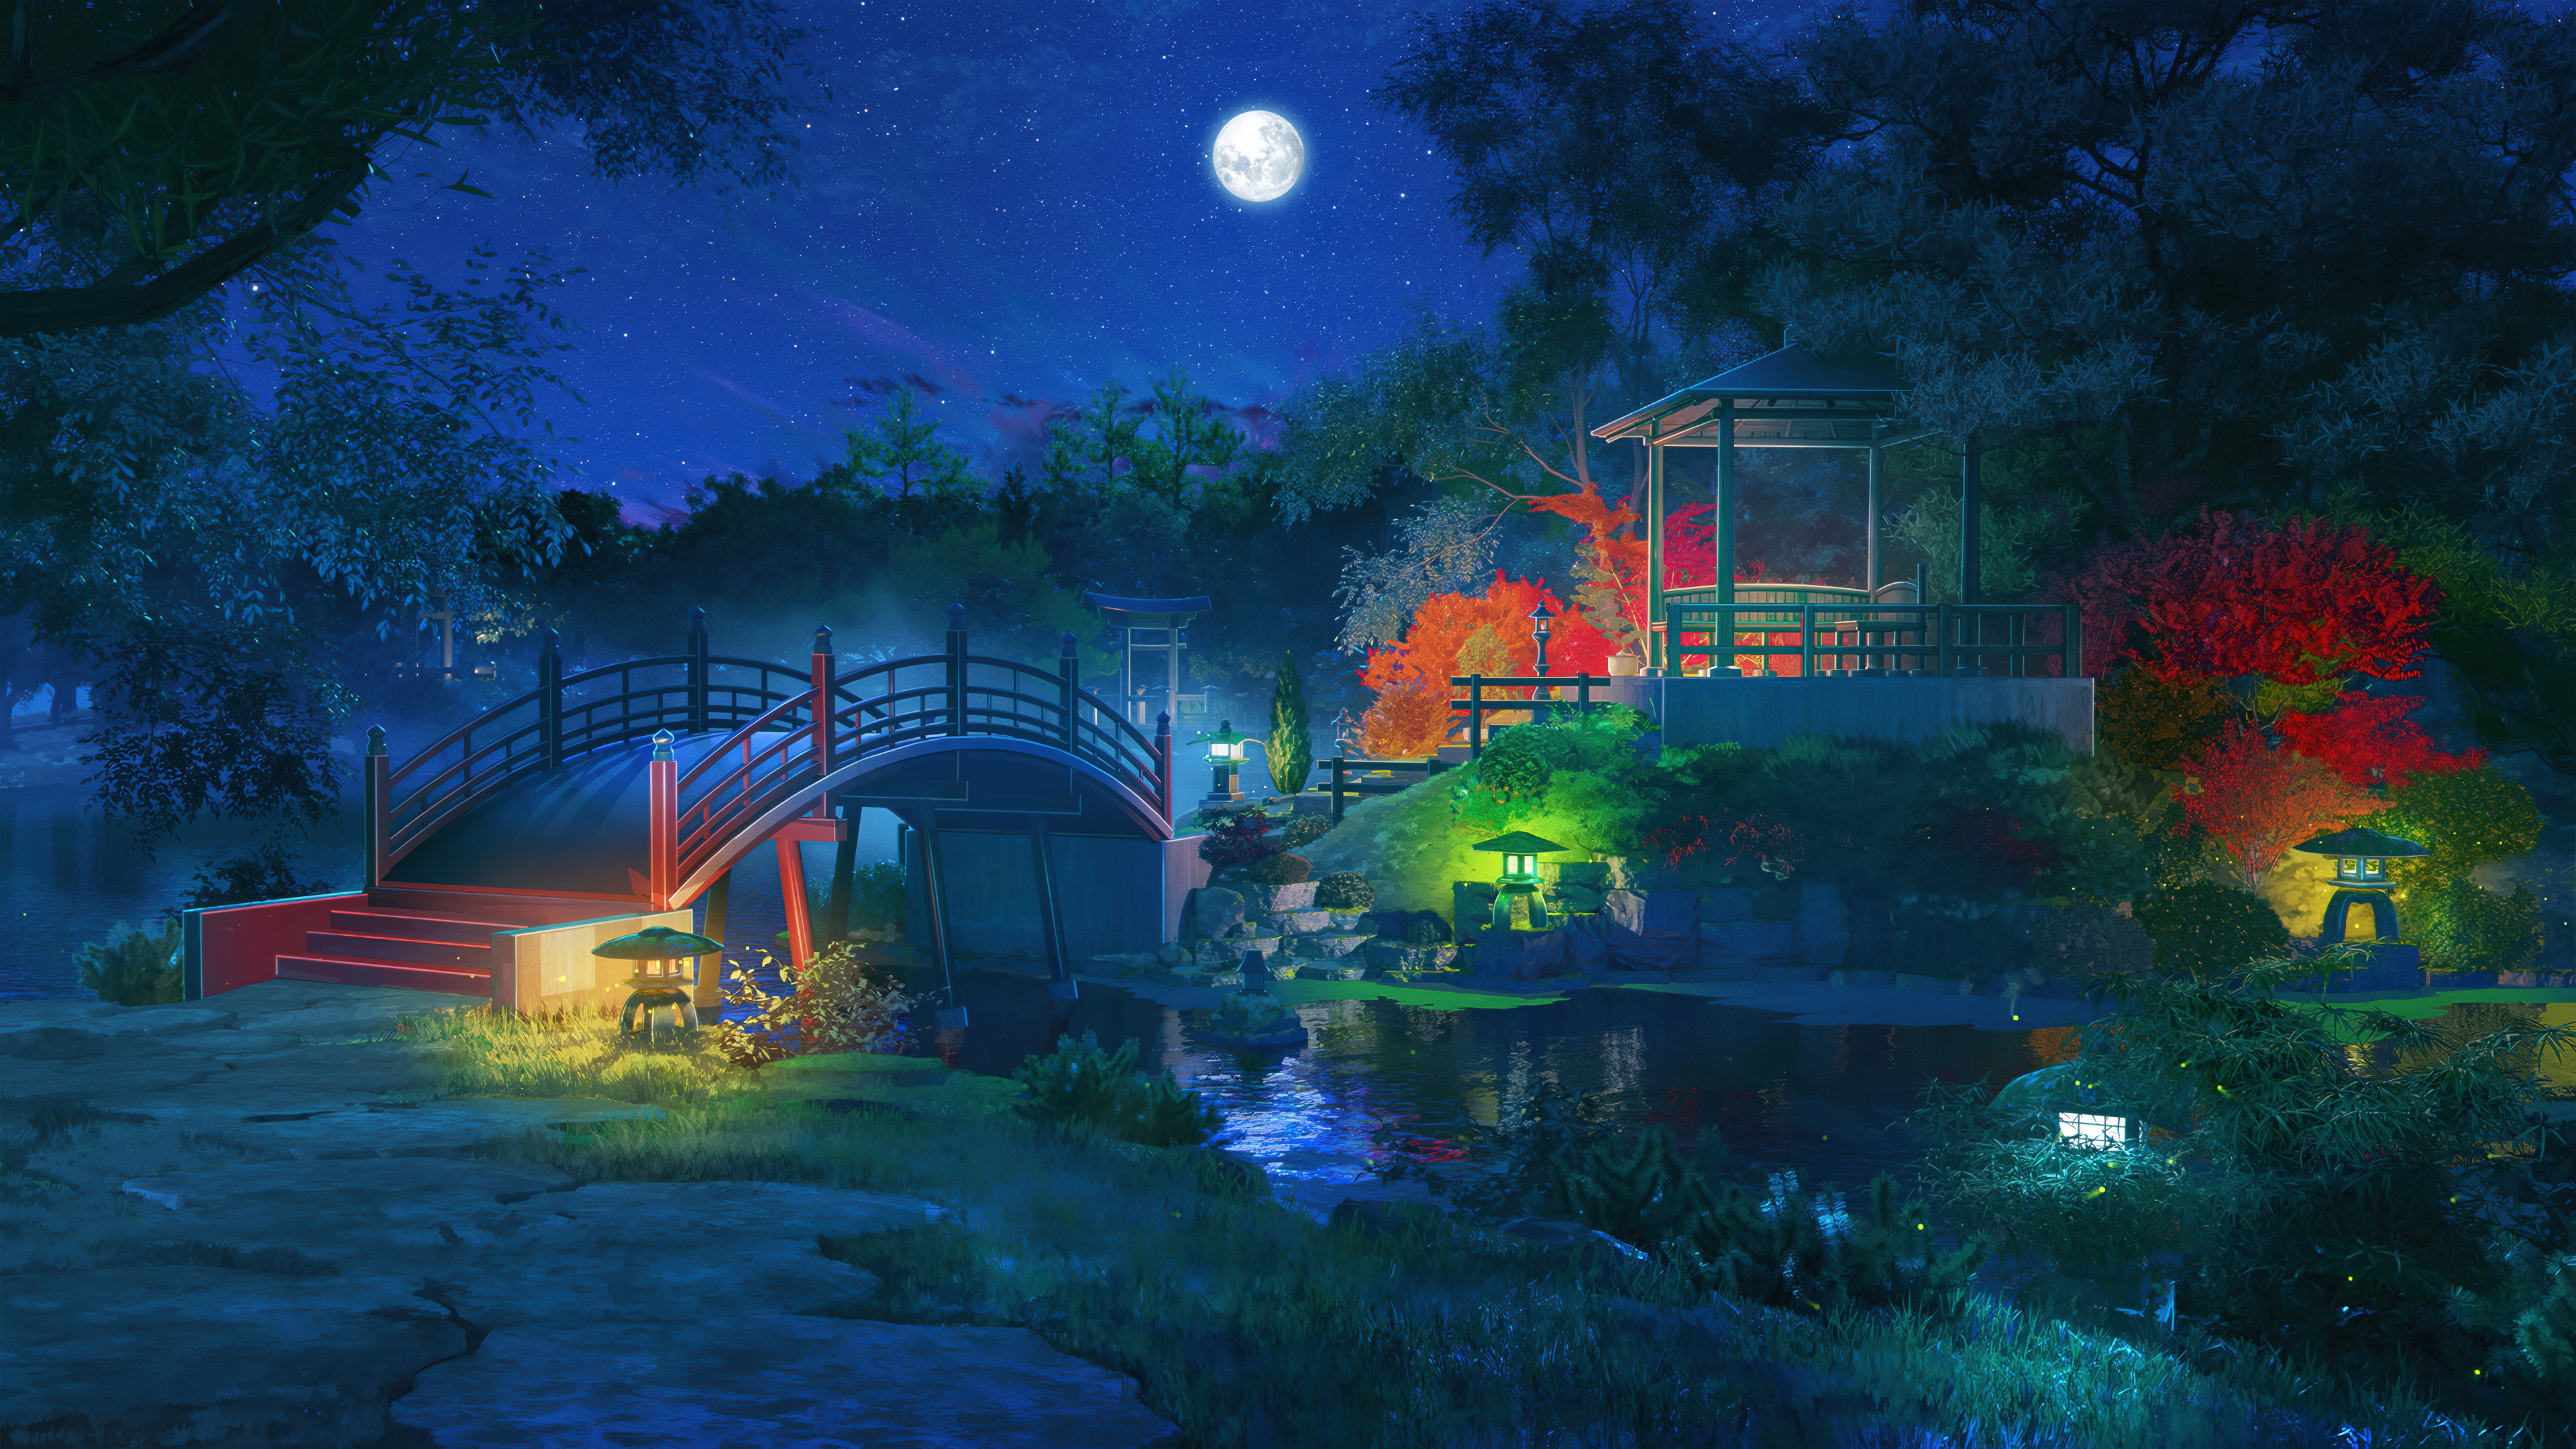 Digital Art Artwork Illustration Night Nightscape Moon Stars Starred Sky Bridge Forest Nature River  3840x2160